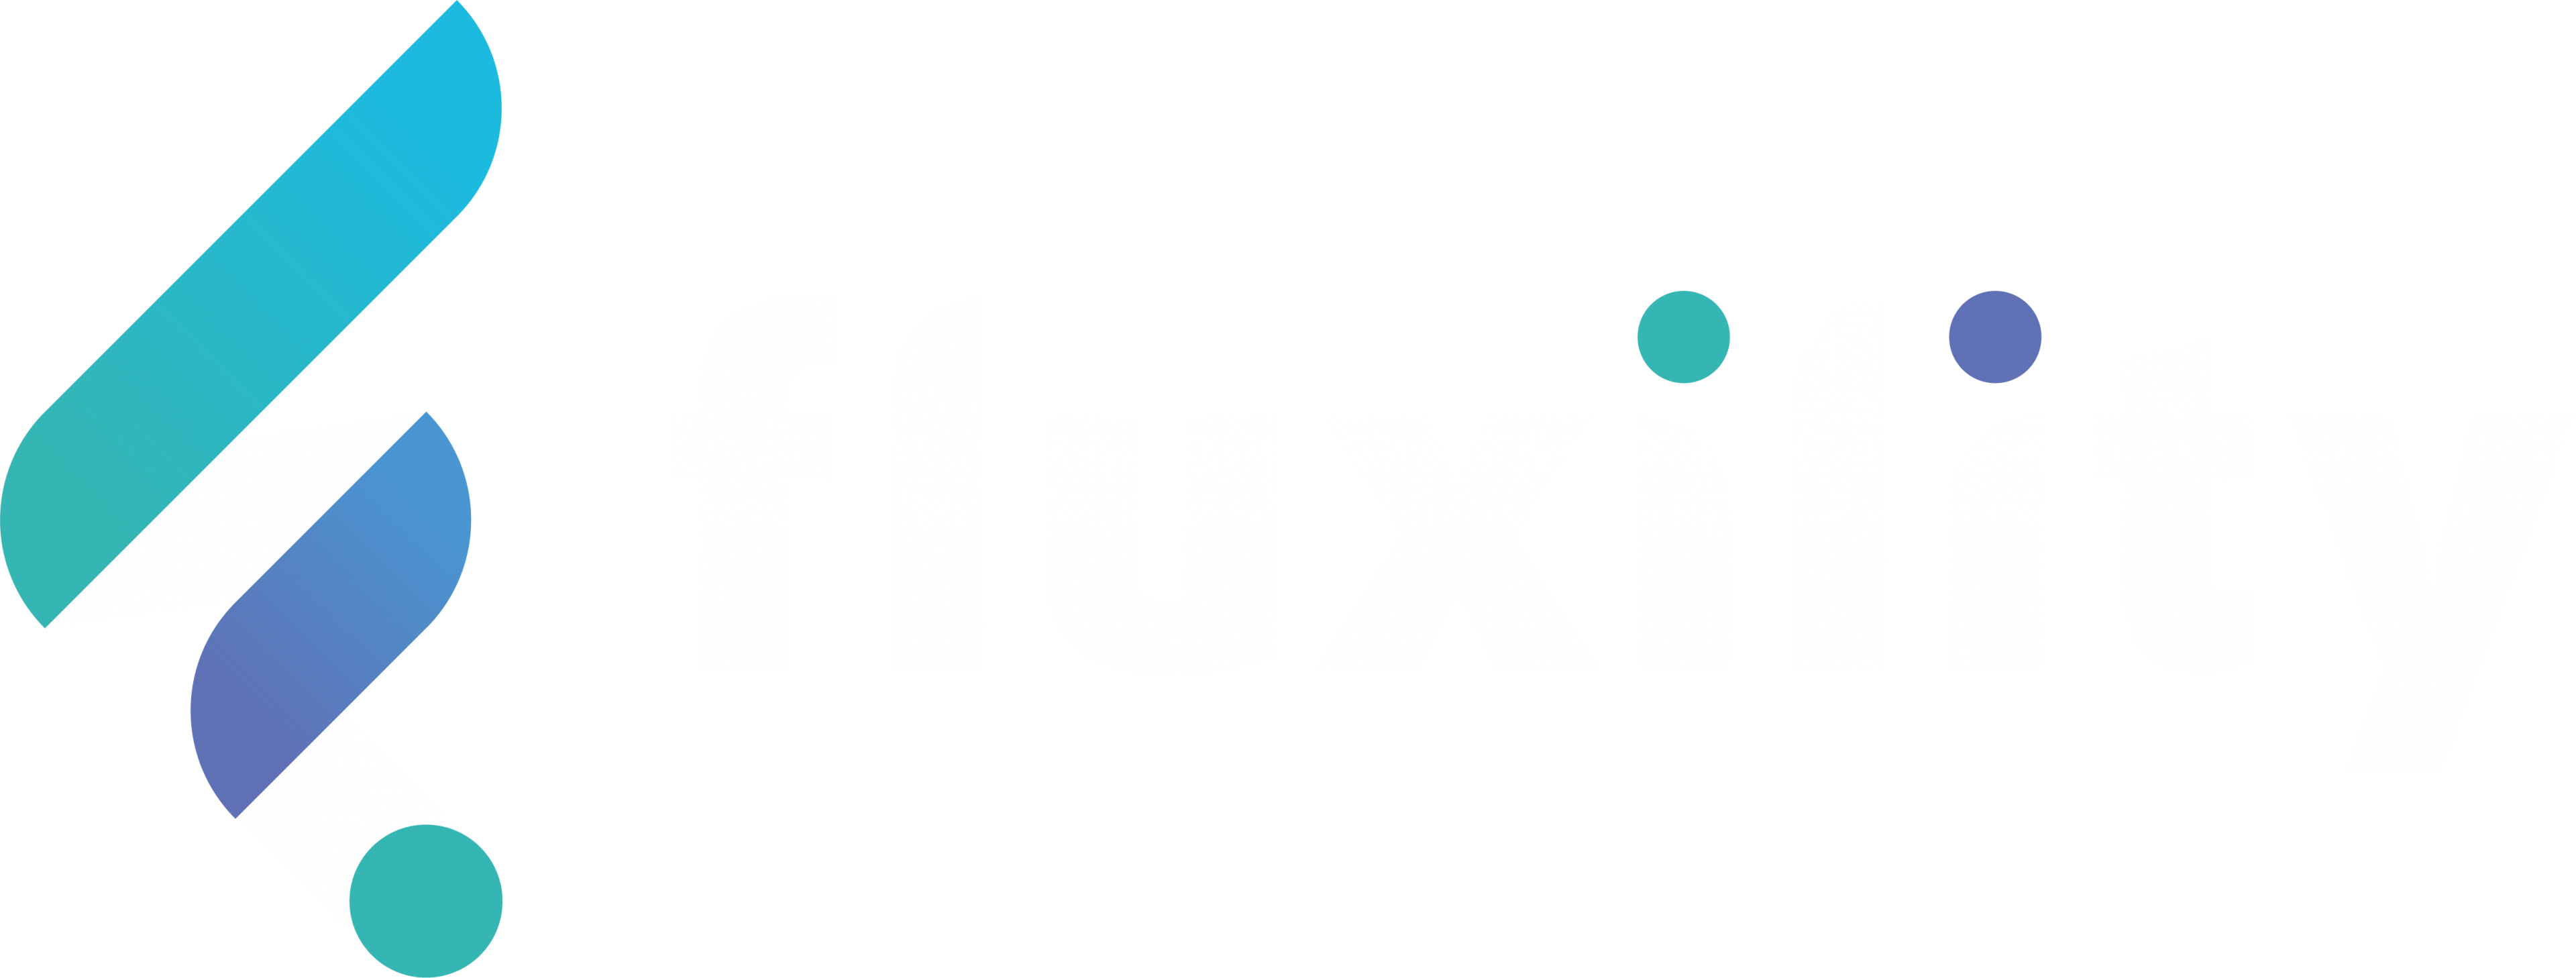 Fluxility logo